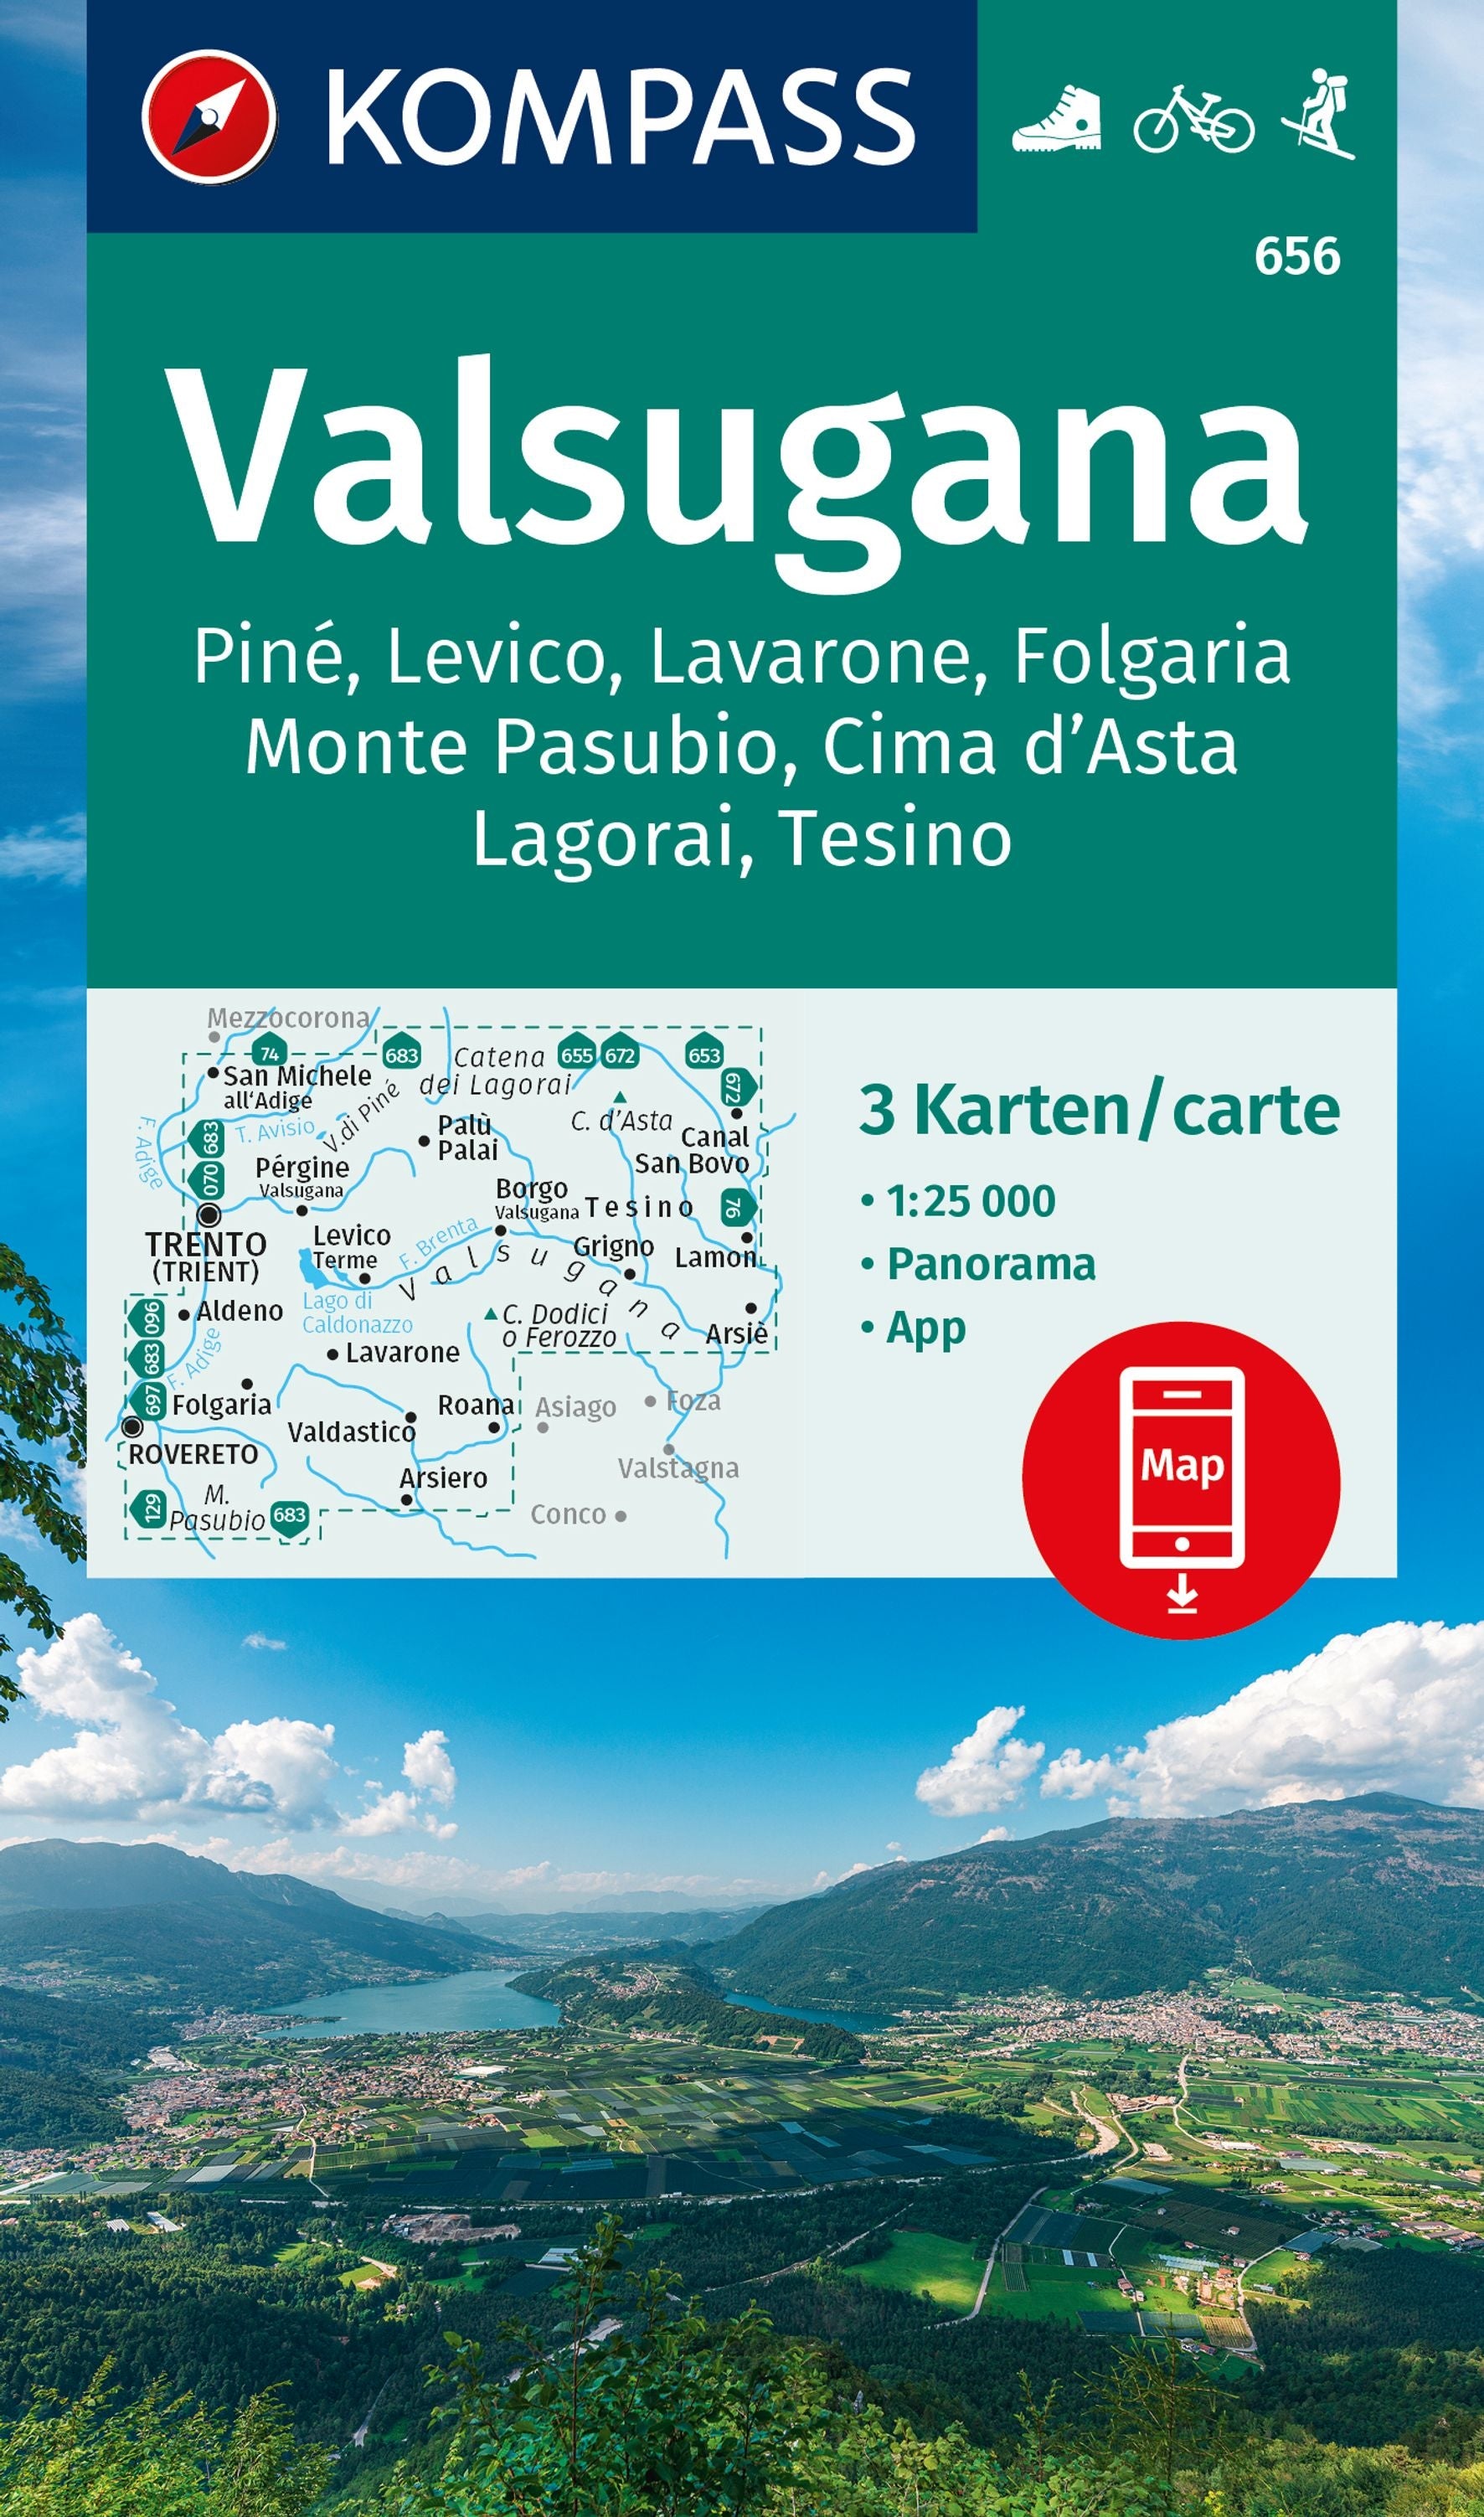 Valsugana, Pine, Levico, Lavarone, Folgaria, Monte Pasubio, Cima d'Asta, Lagorai, Tesino - KOMPASS Wanderkarten-Set